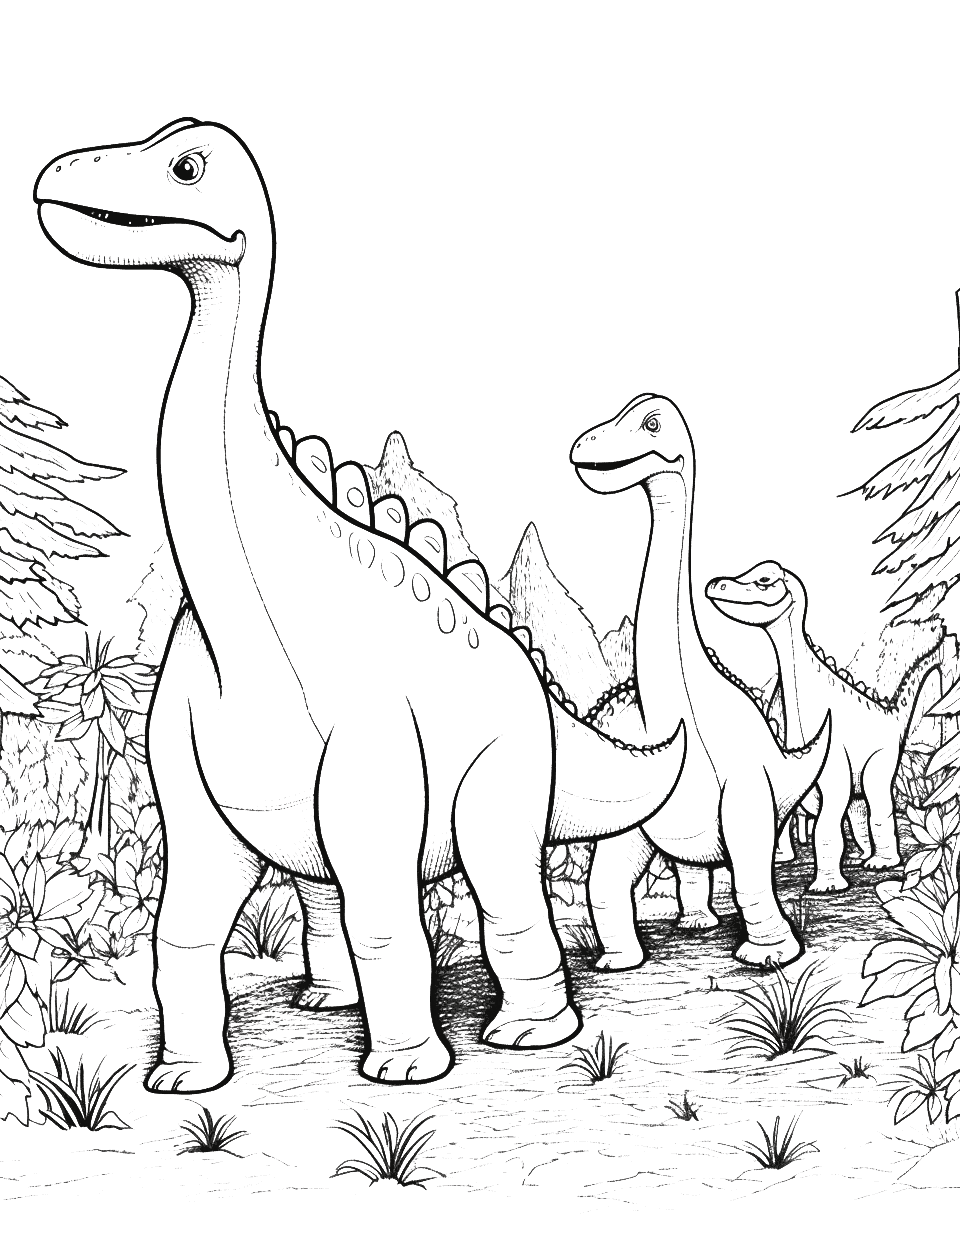 Parasaurolophus Parade Dinosaur Coloring Page - A parade of Parasaurolophus walking through the forest.